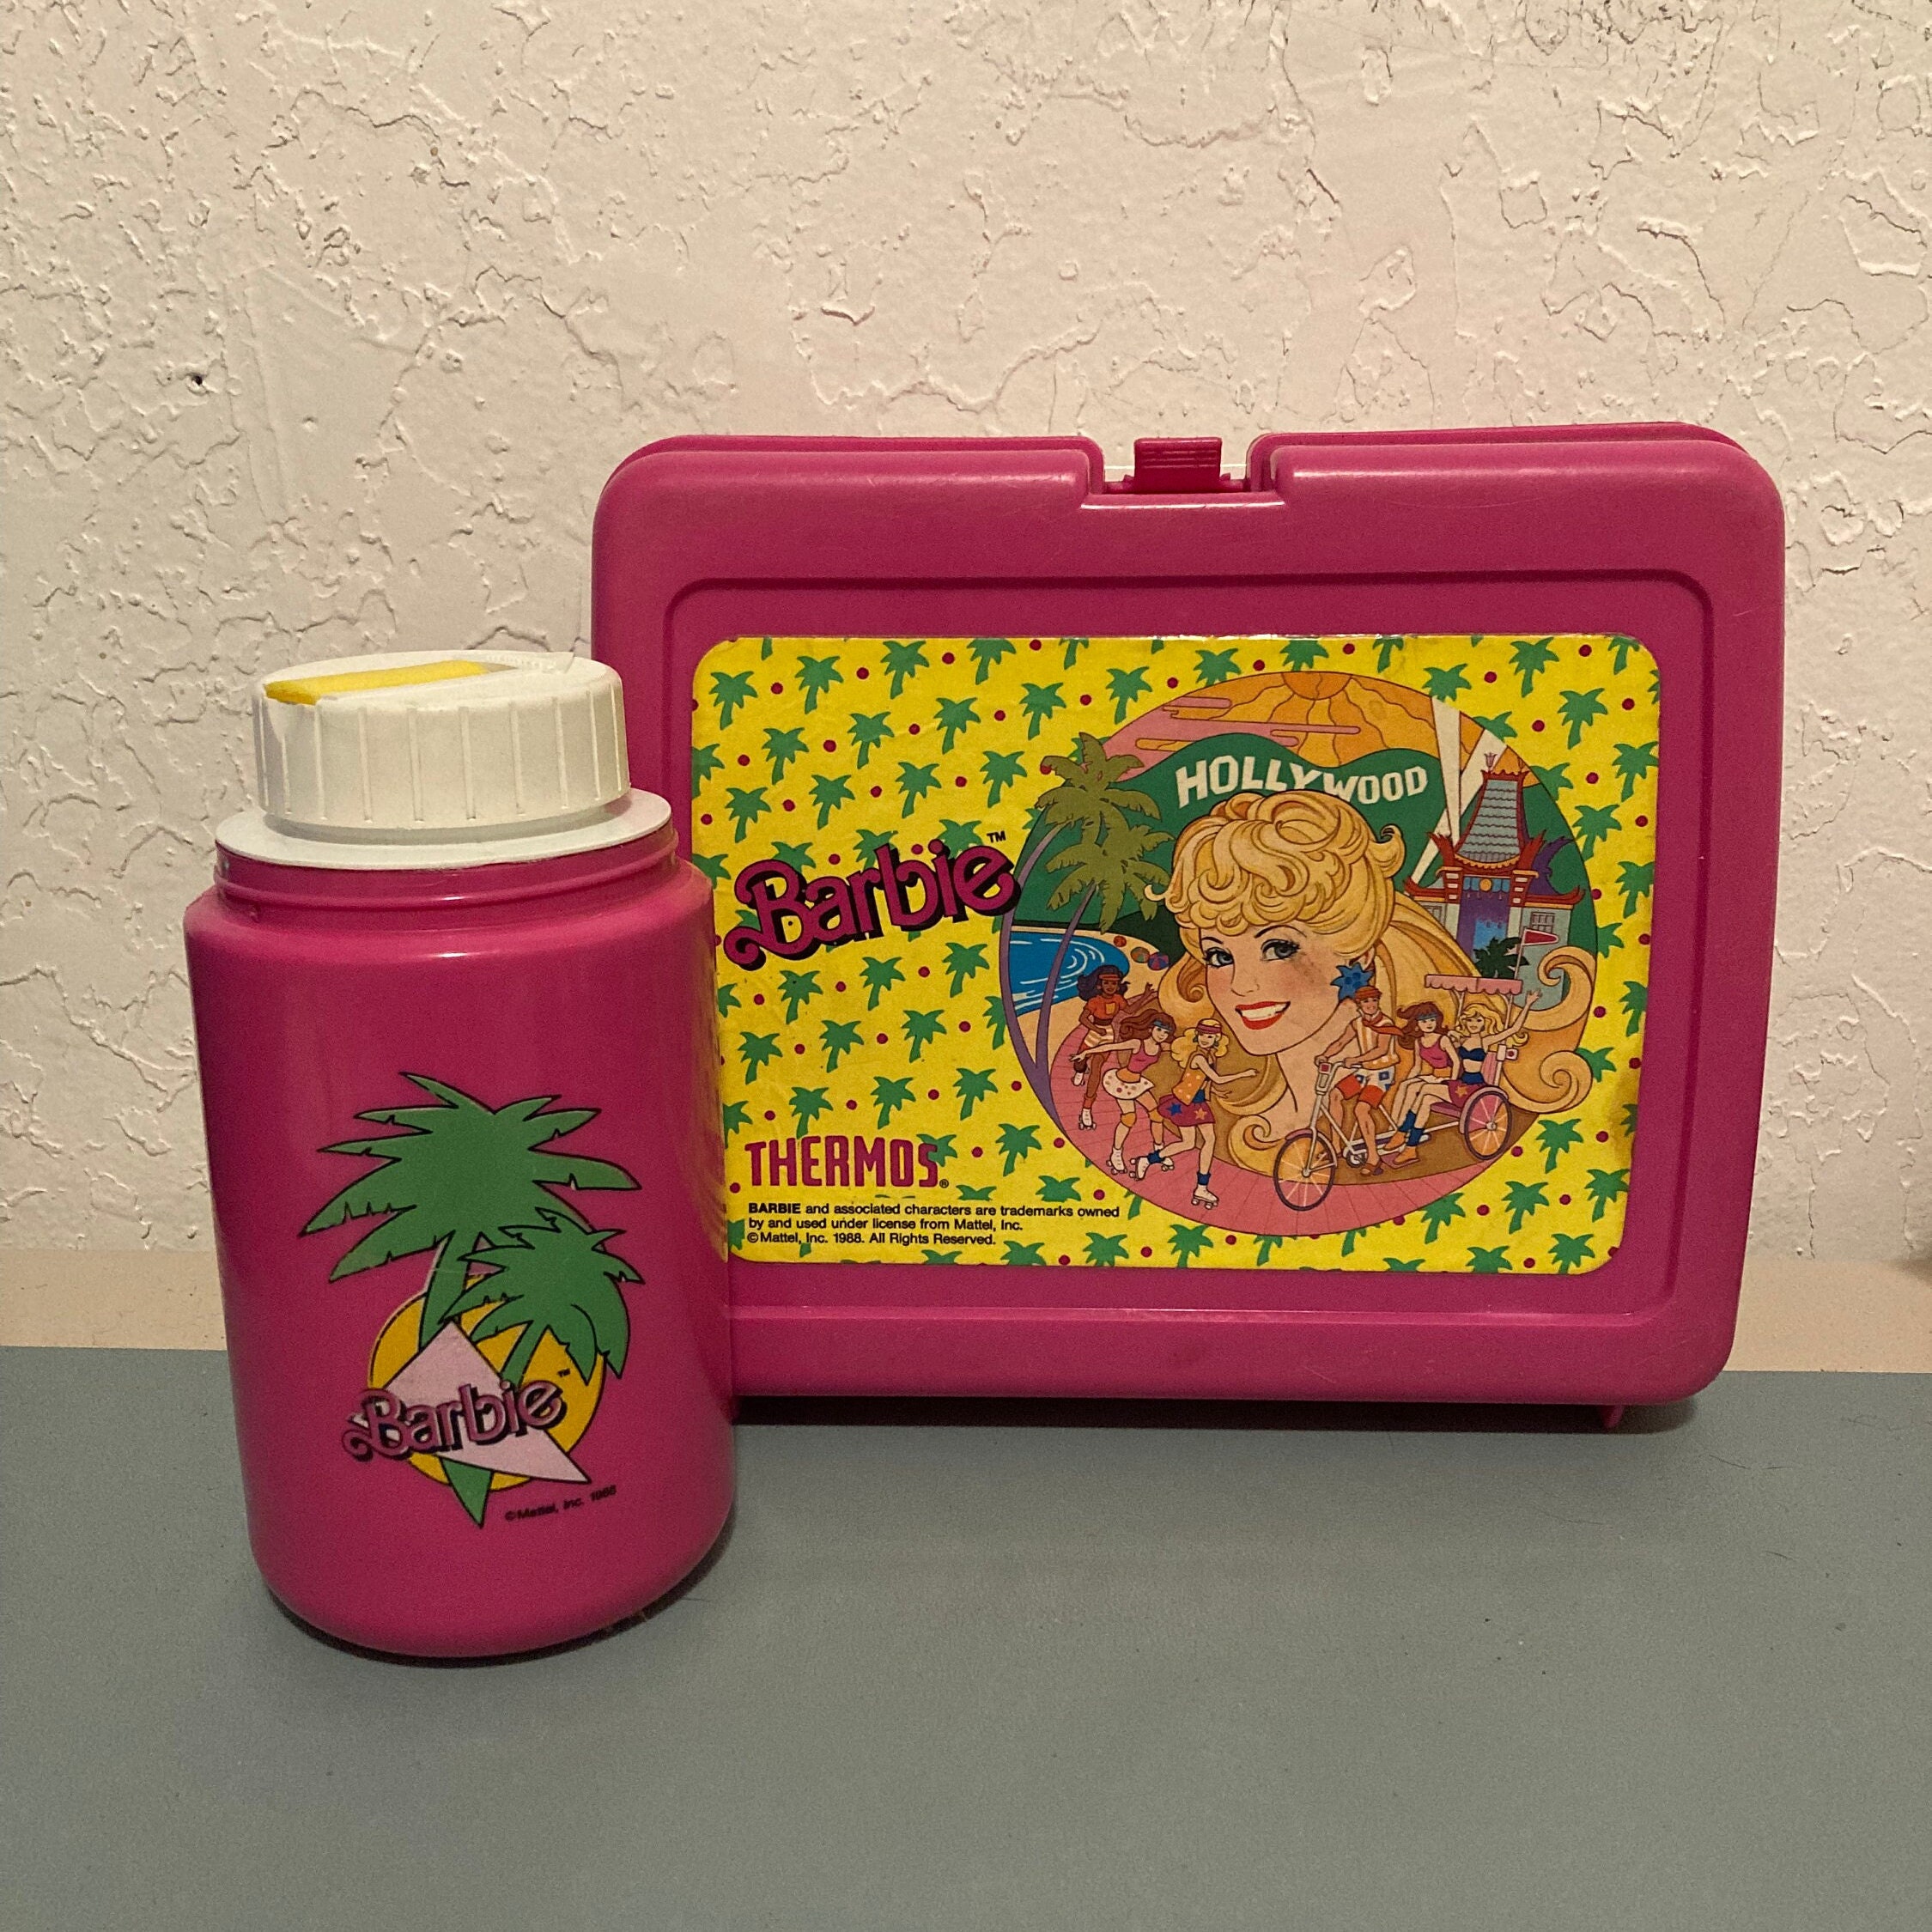 Vintage Hot Pink Barbie Plastic Lunchbox Rare